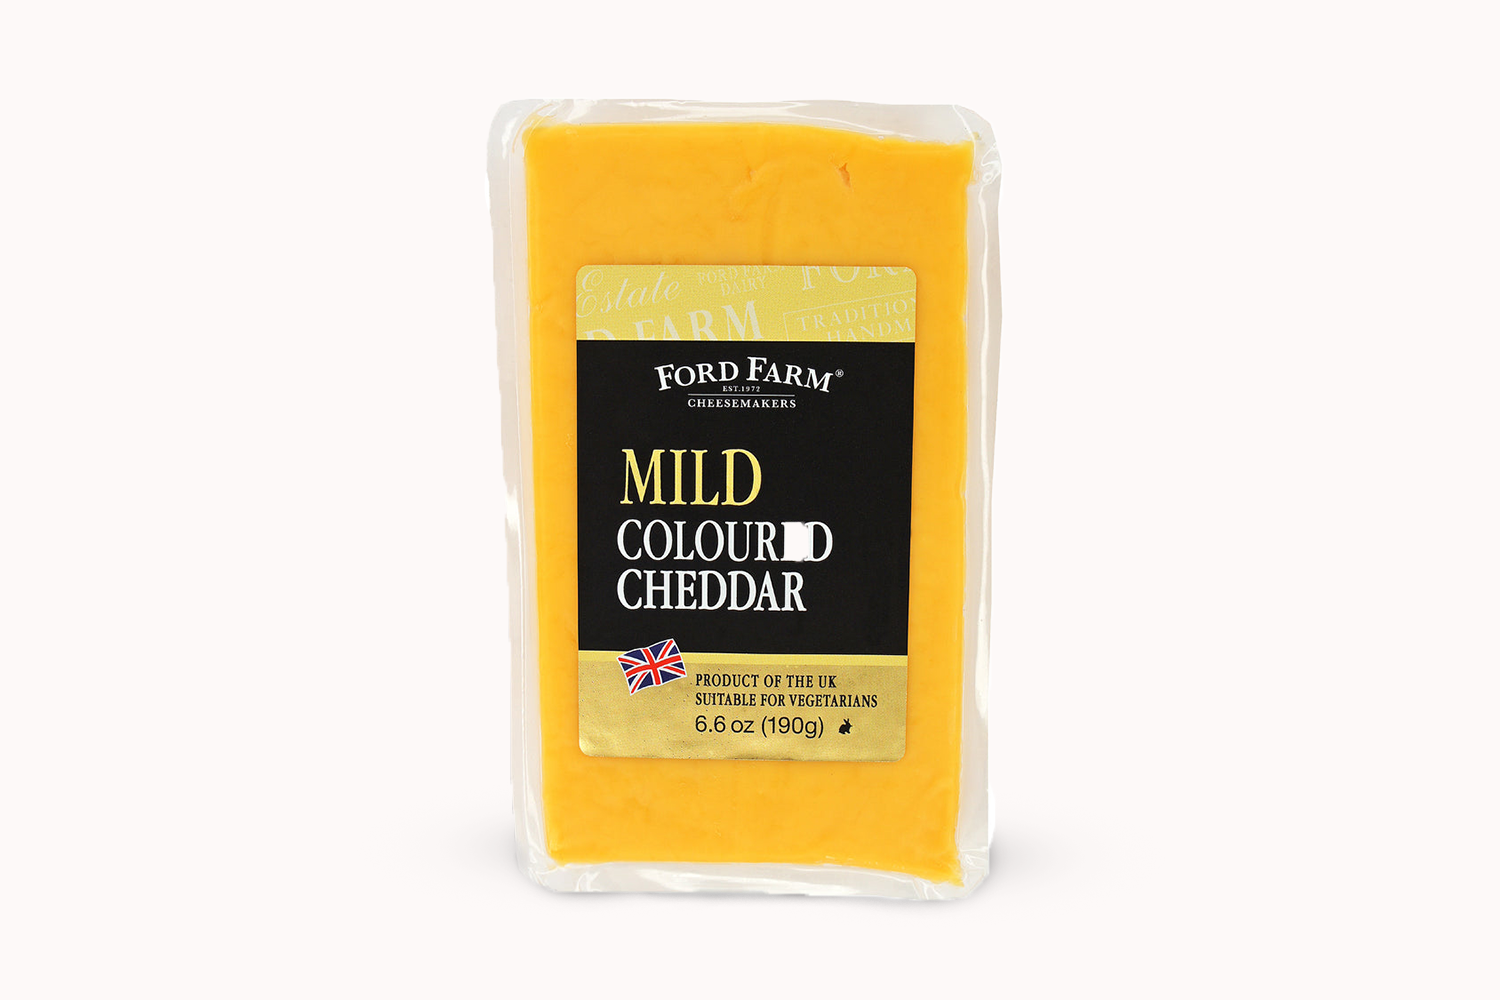 Ford Farm Matured Coloured Cheddar Cheese